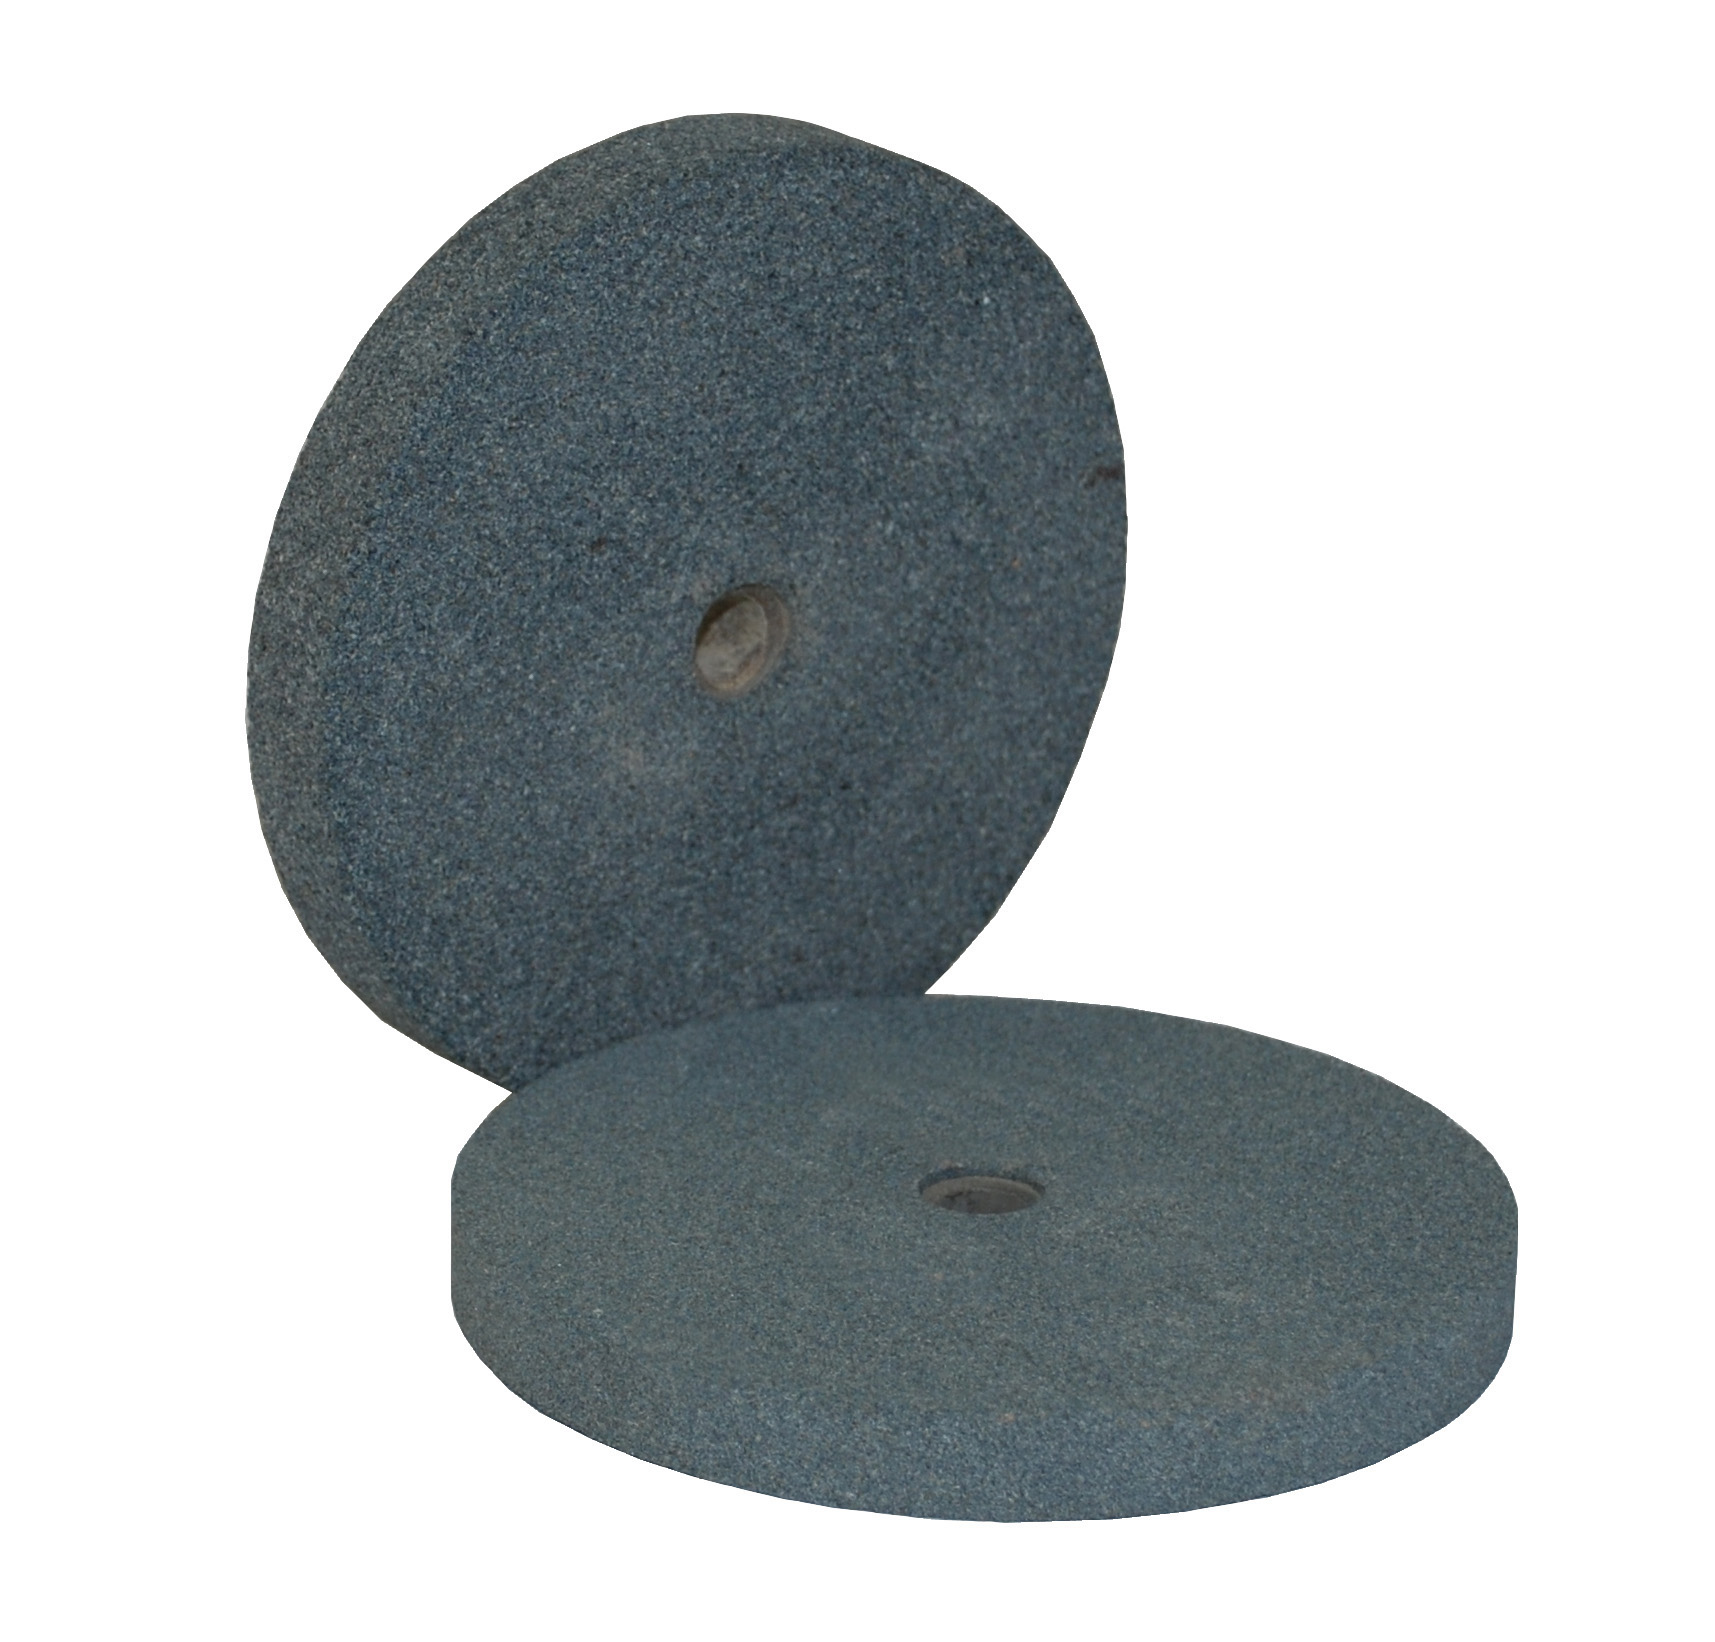 BULLE Πέτρα για δίδυμους τροχούς πάγκου 150x40x20 grit 80